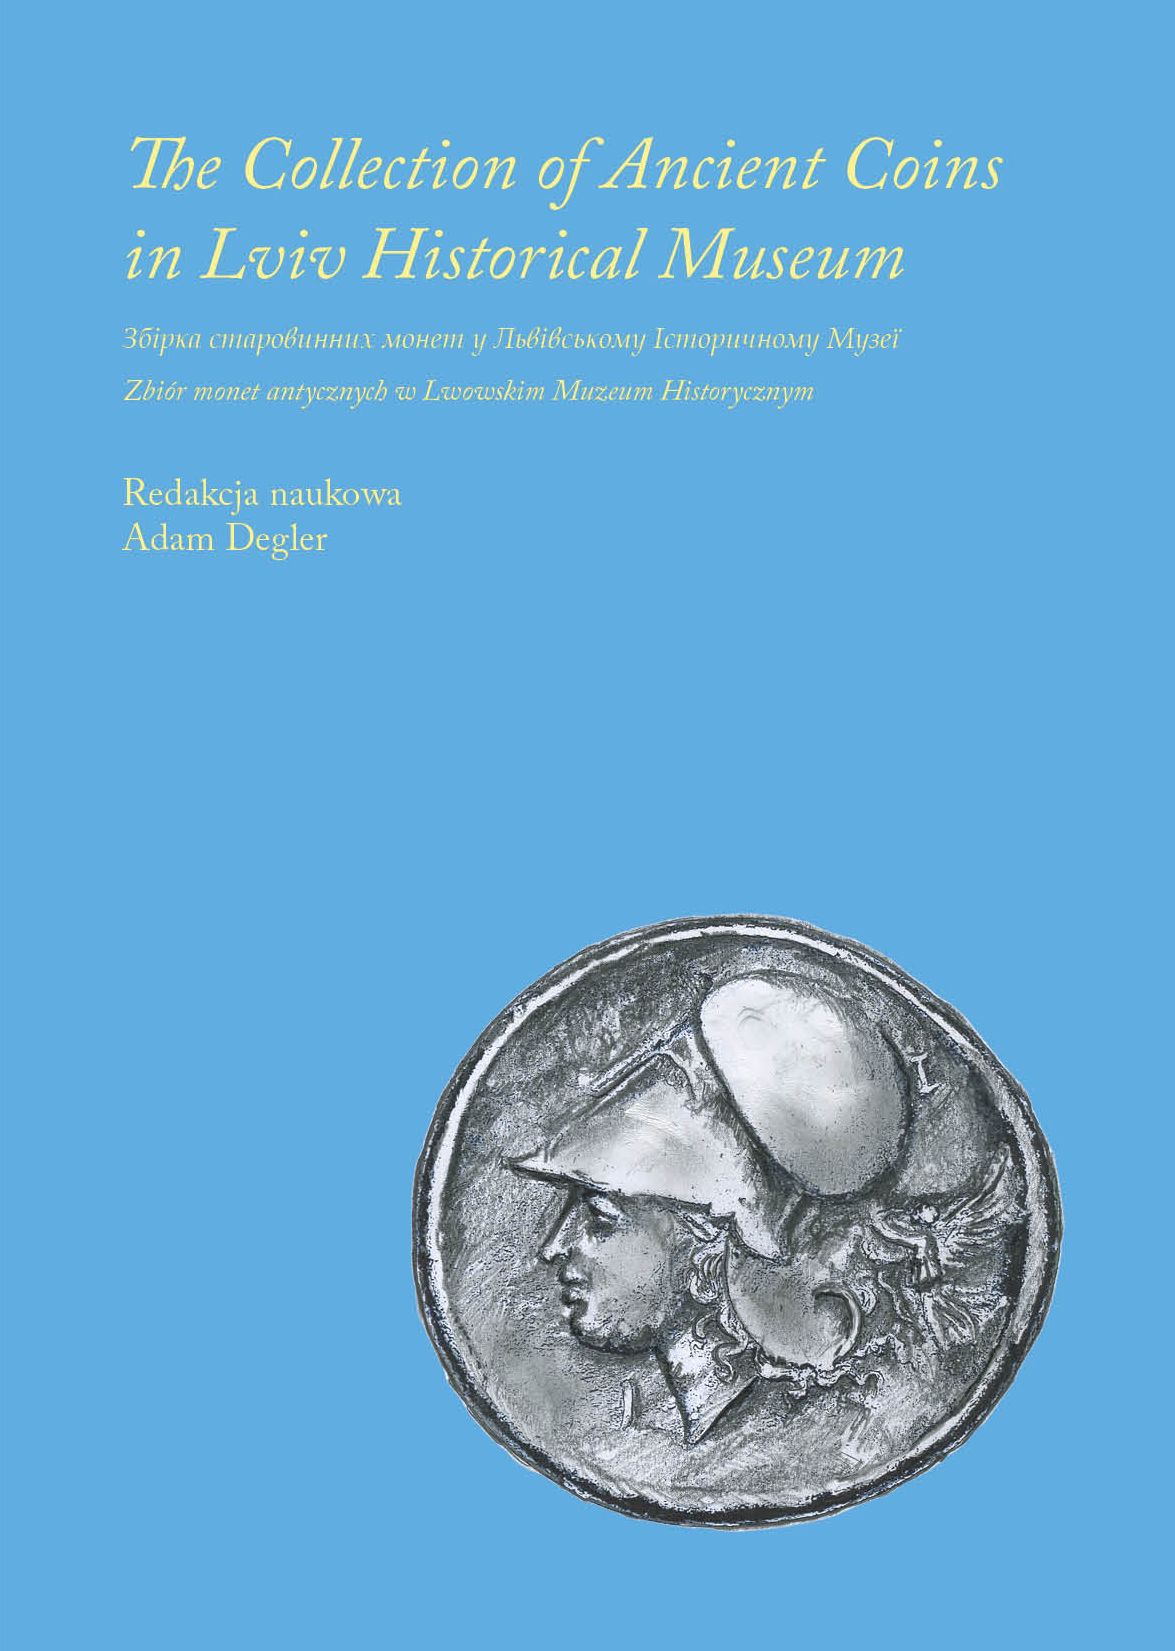 “The Collection of Ancient Coins in Lviv Historical Museum” pod redakcją Adama Deglera